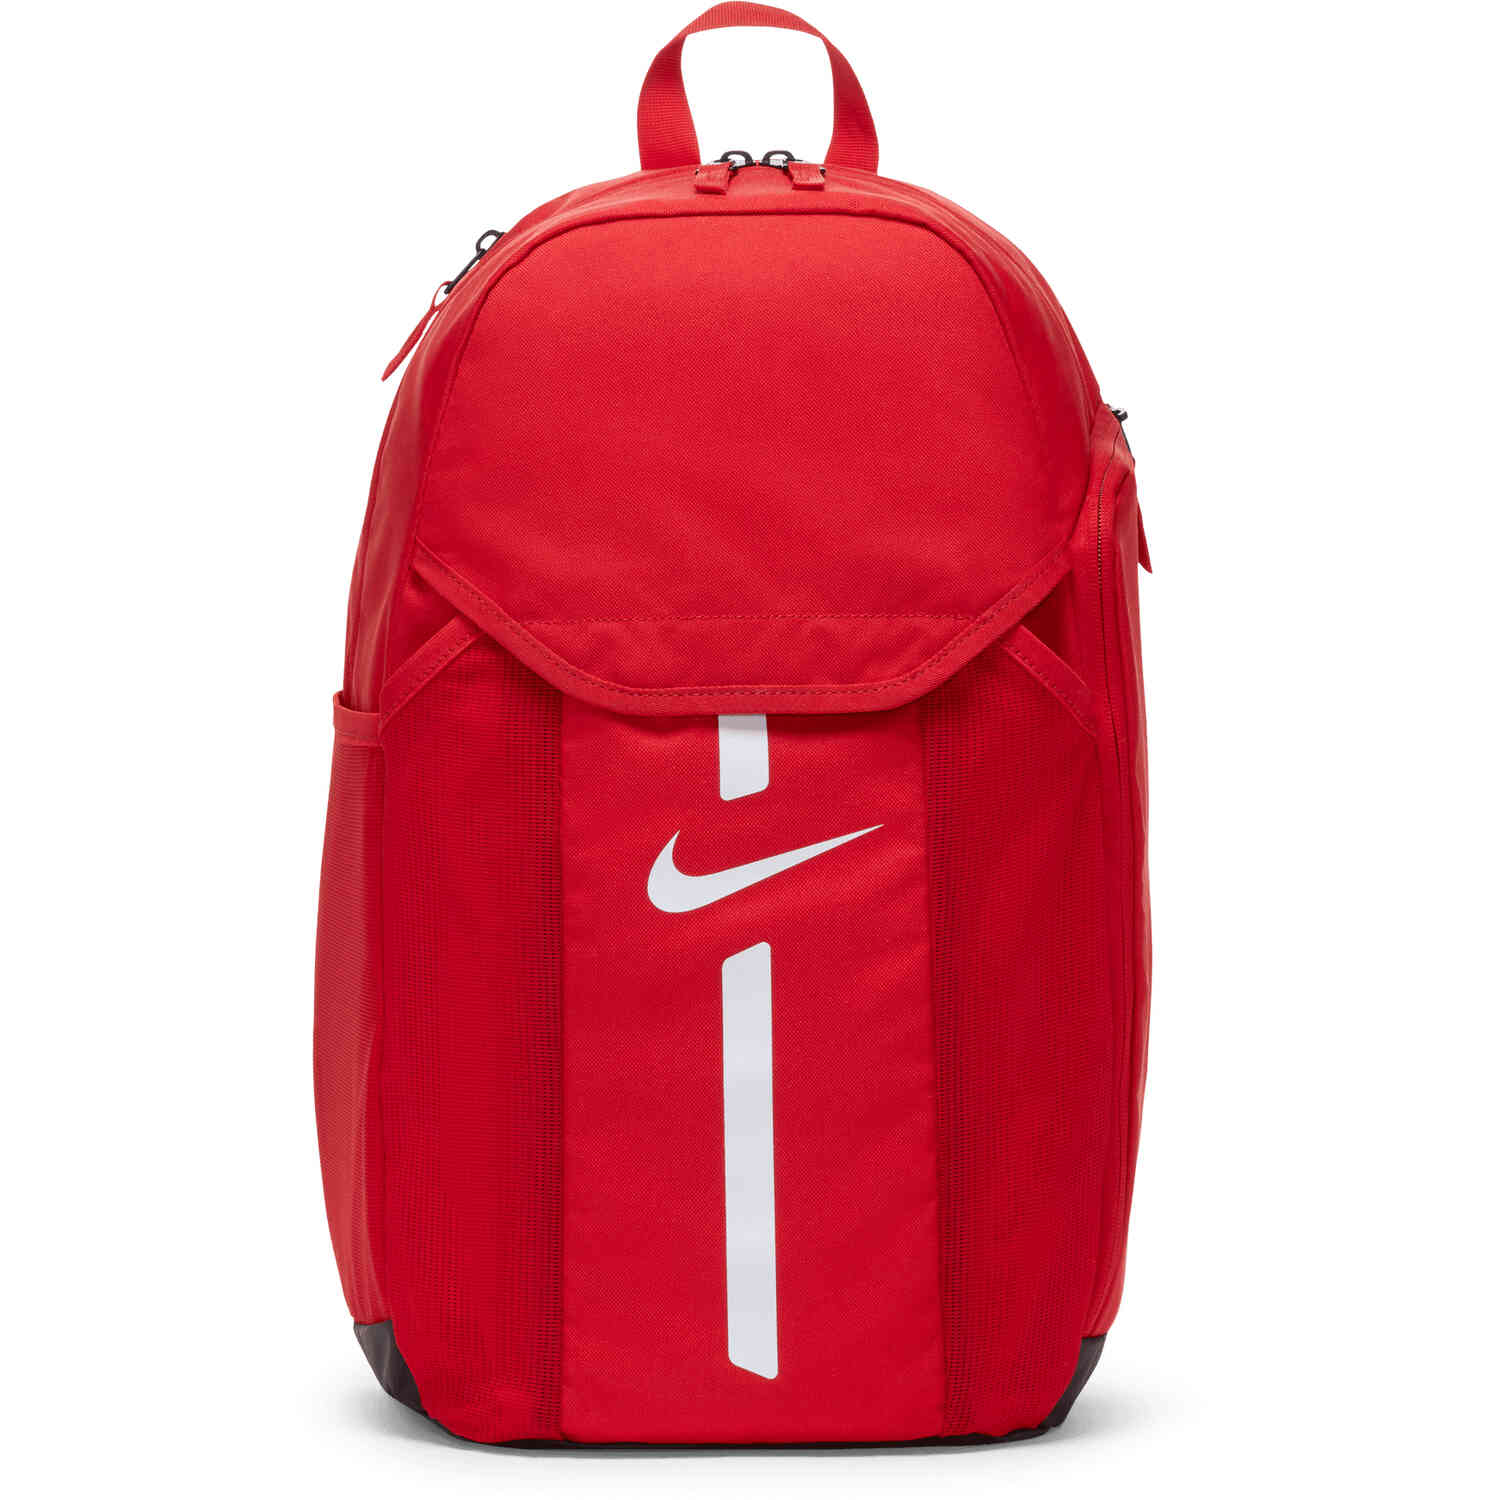 Nike Academy Backpack - University Red - SoccerPro